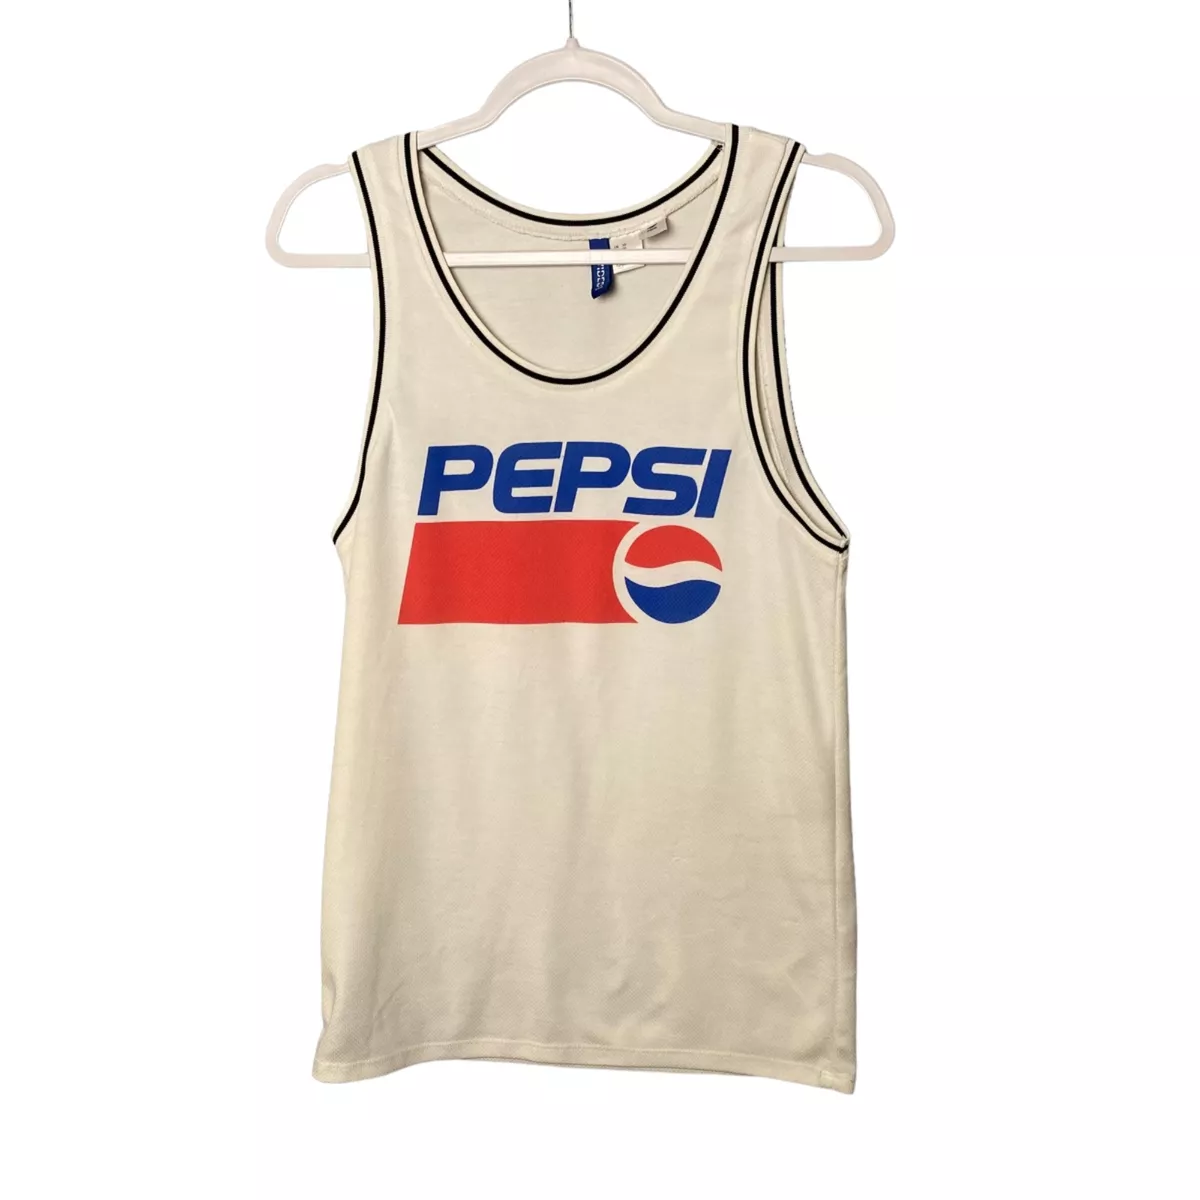 H&M Divided Women White Mesh Ribbed Pepsi Logo Jersey Tank Top Shirt  Size XS